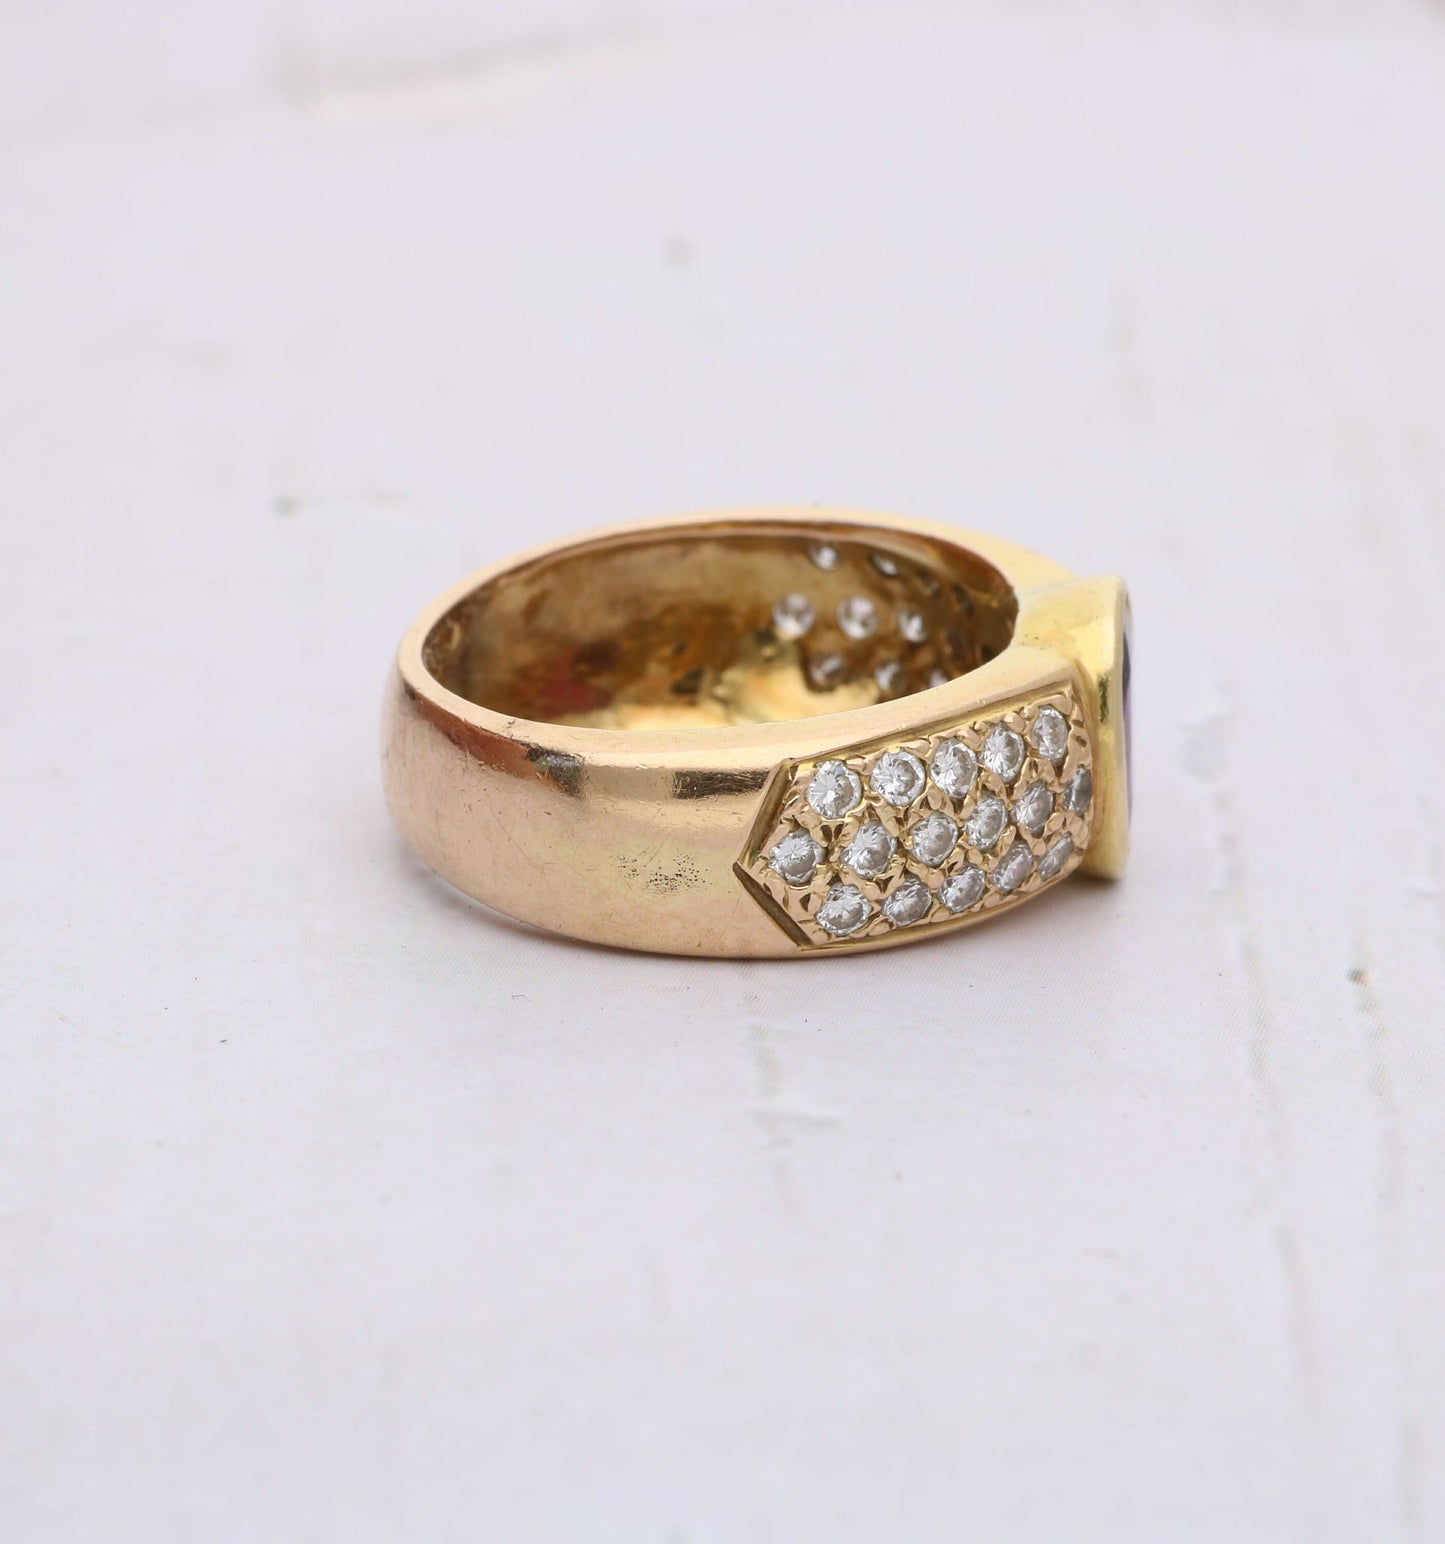 Rose gold garnet and diamond ring